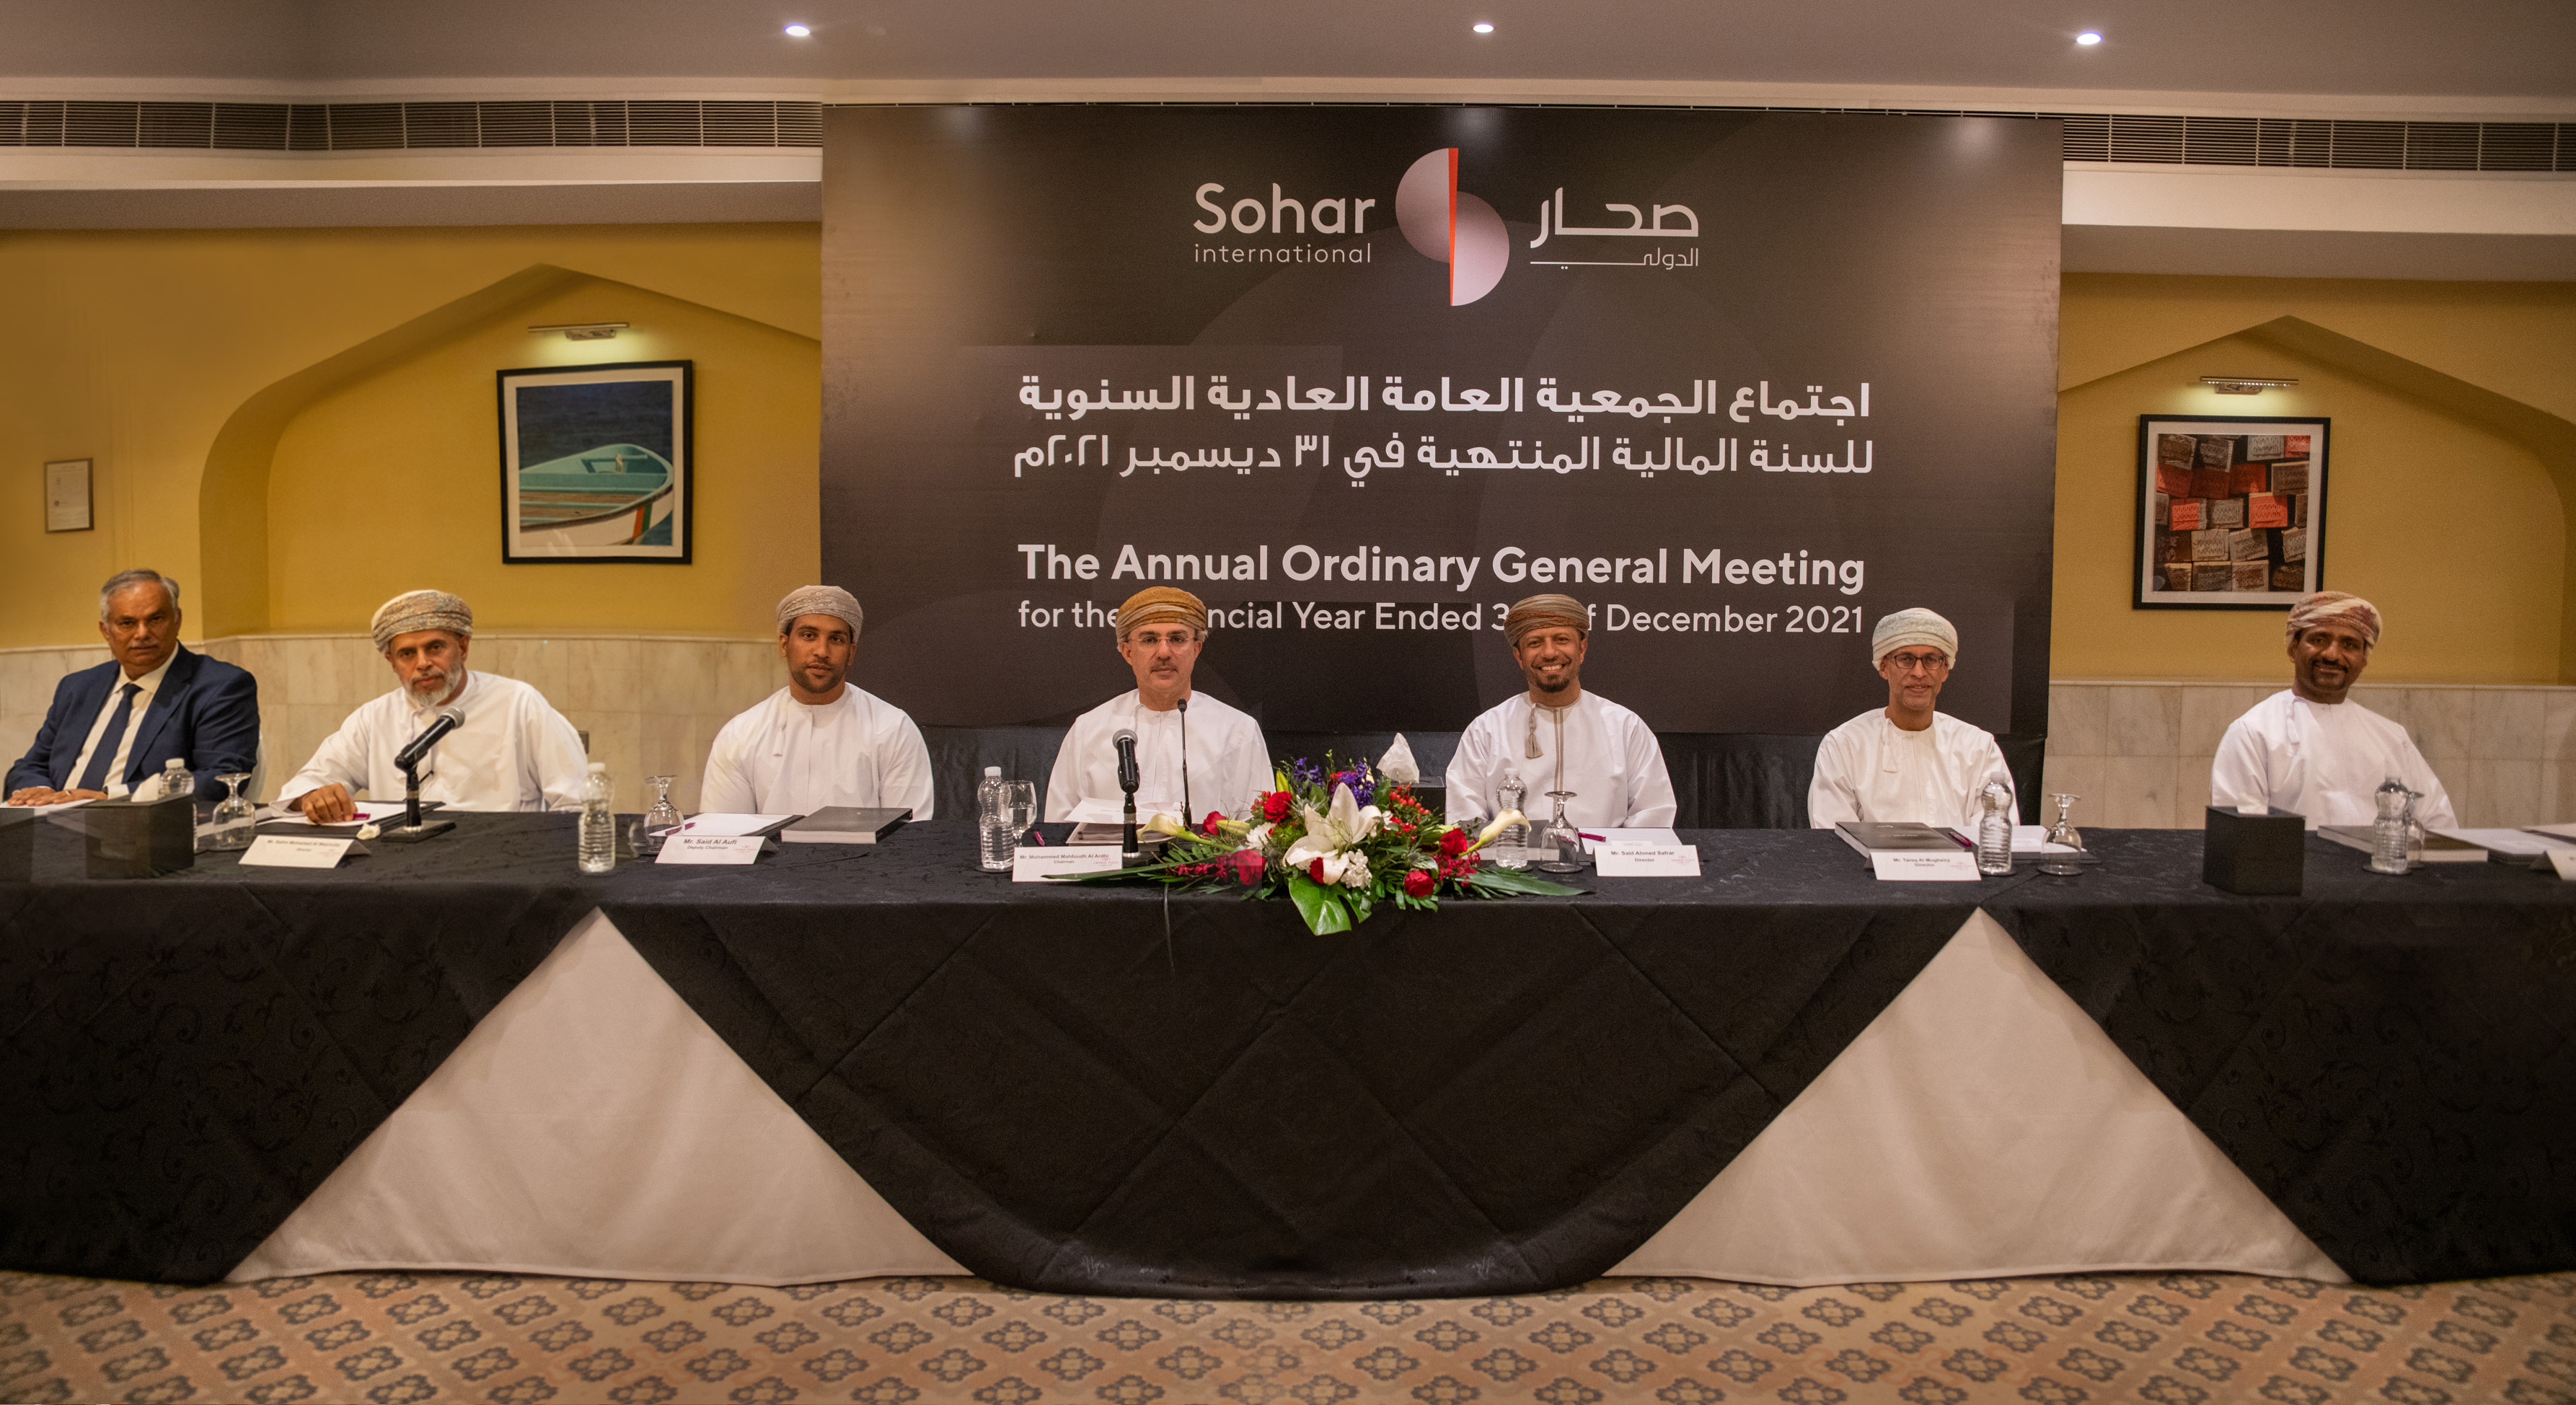 Sohar International Shareholders Approve 4% Dividend During AGM